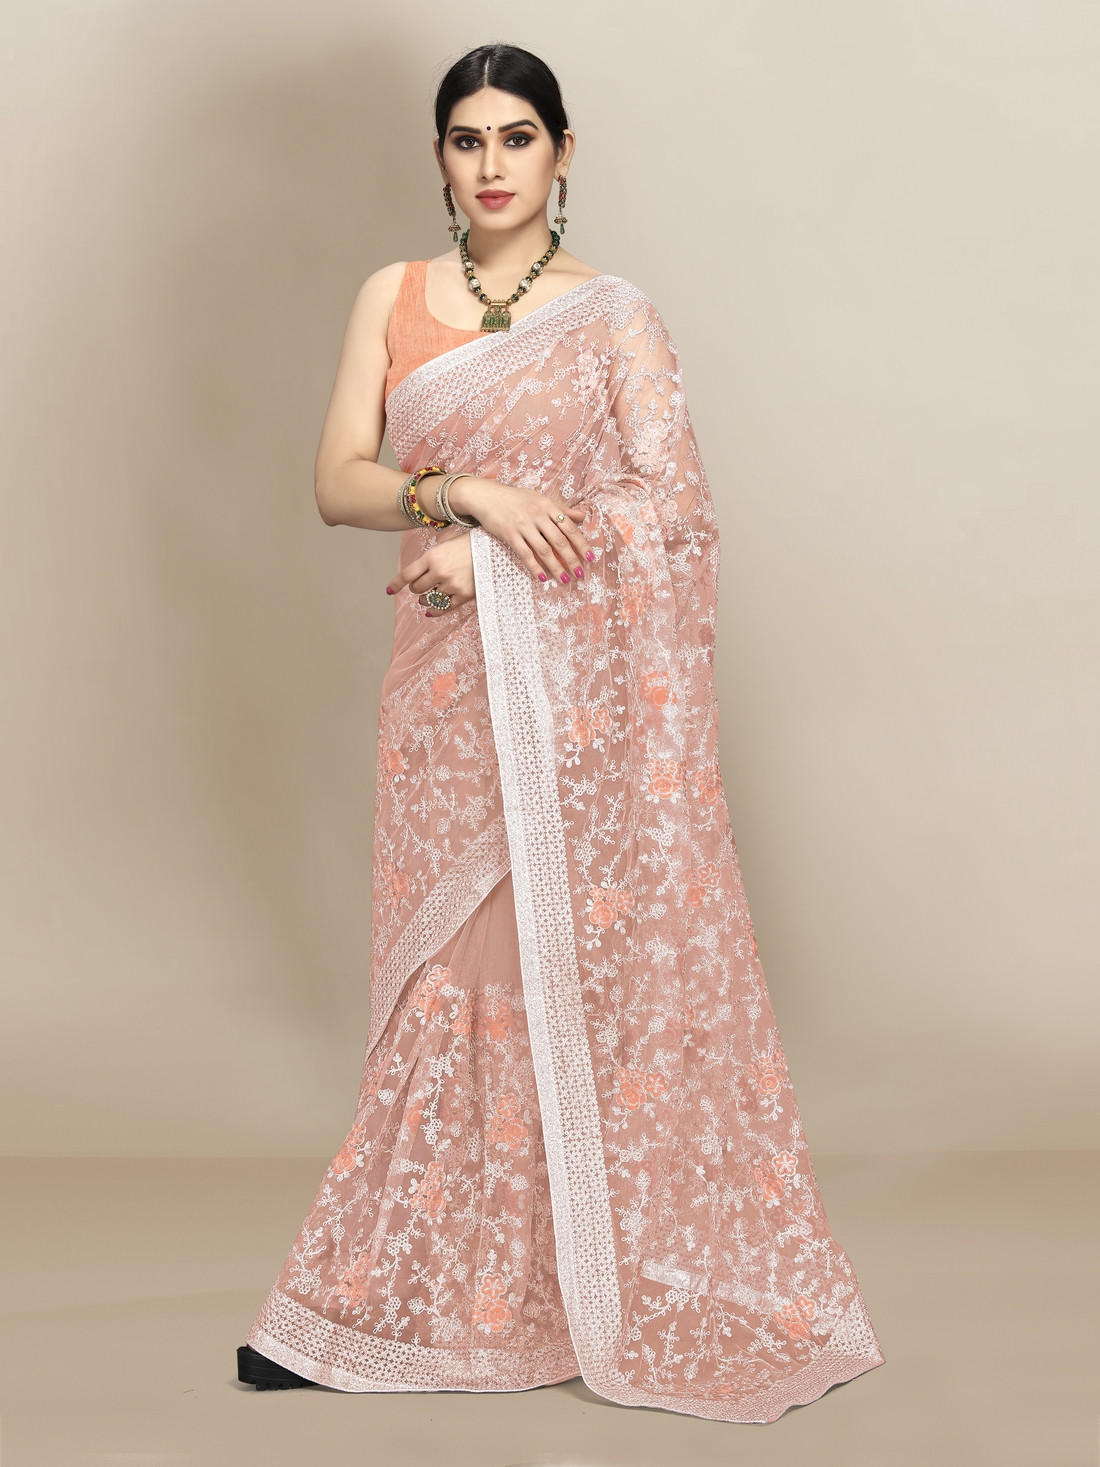 Super Net beautiful Designer Saree with extraordinary embroidery-Peach